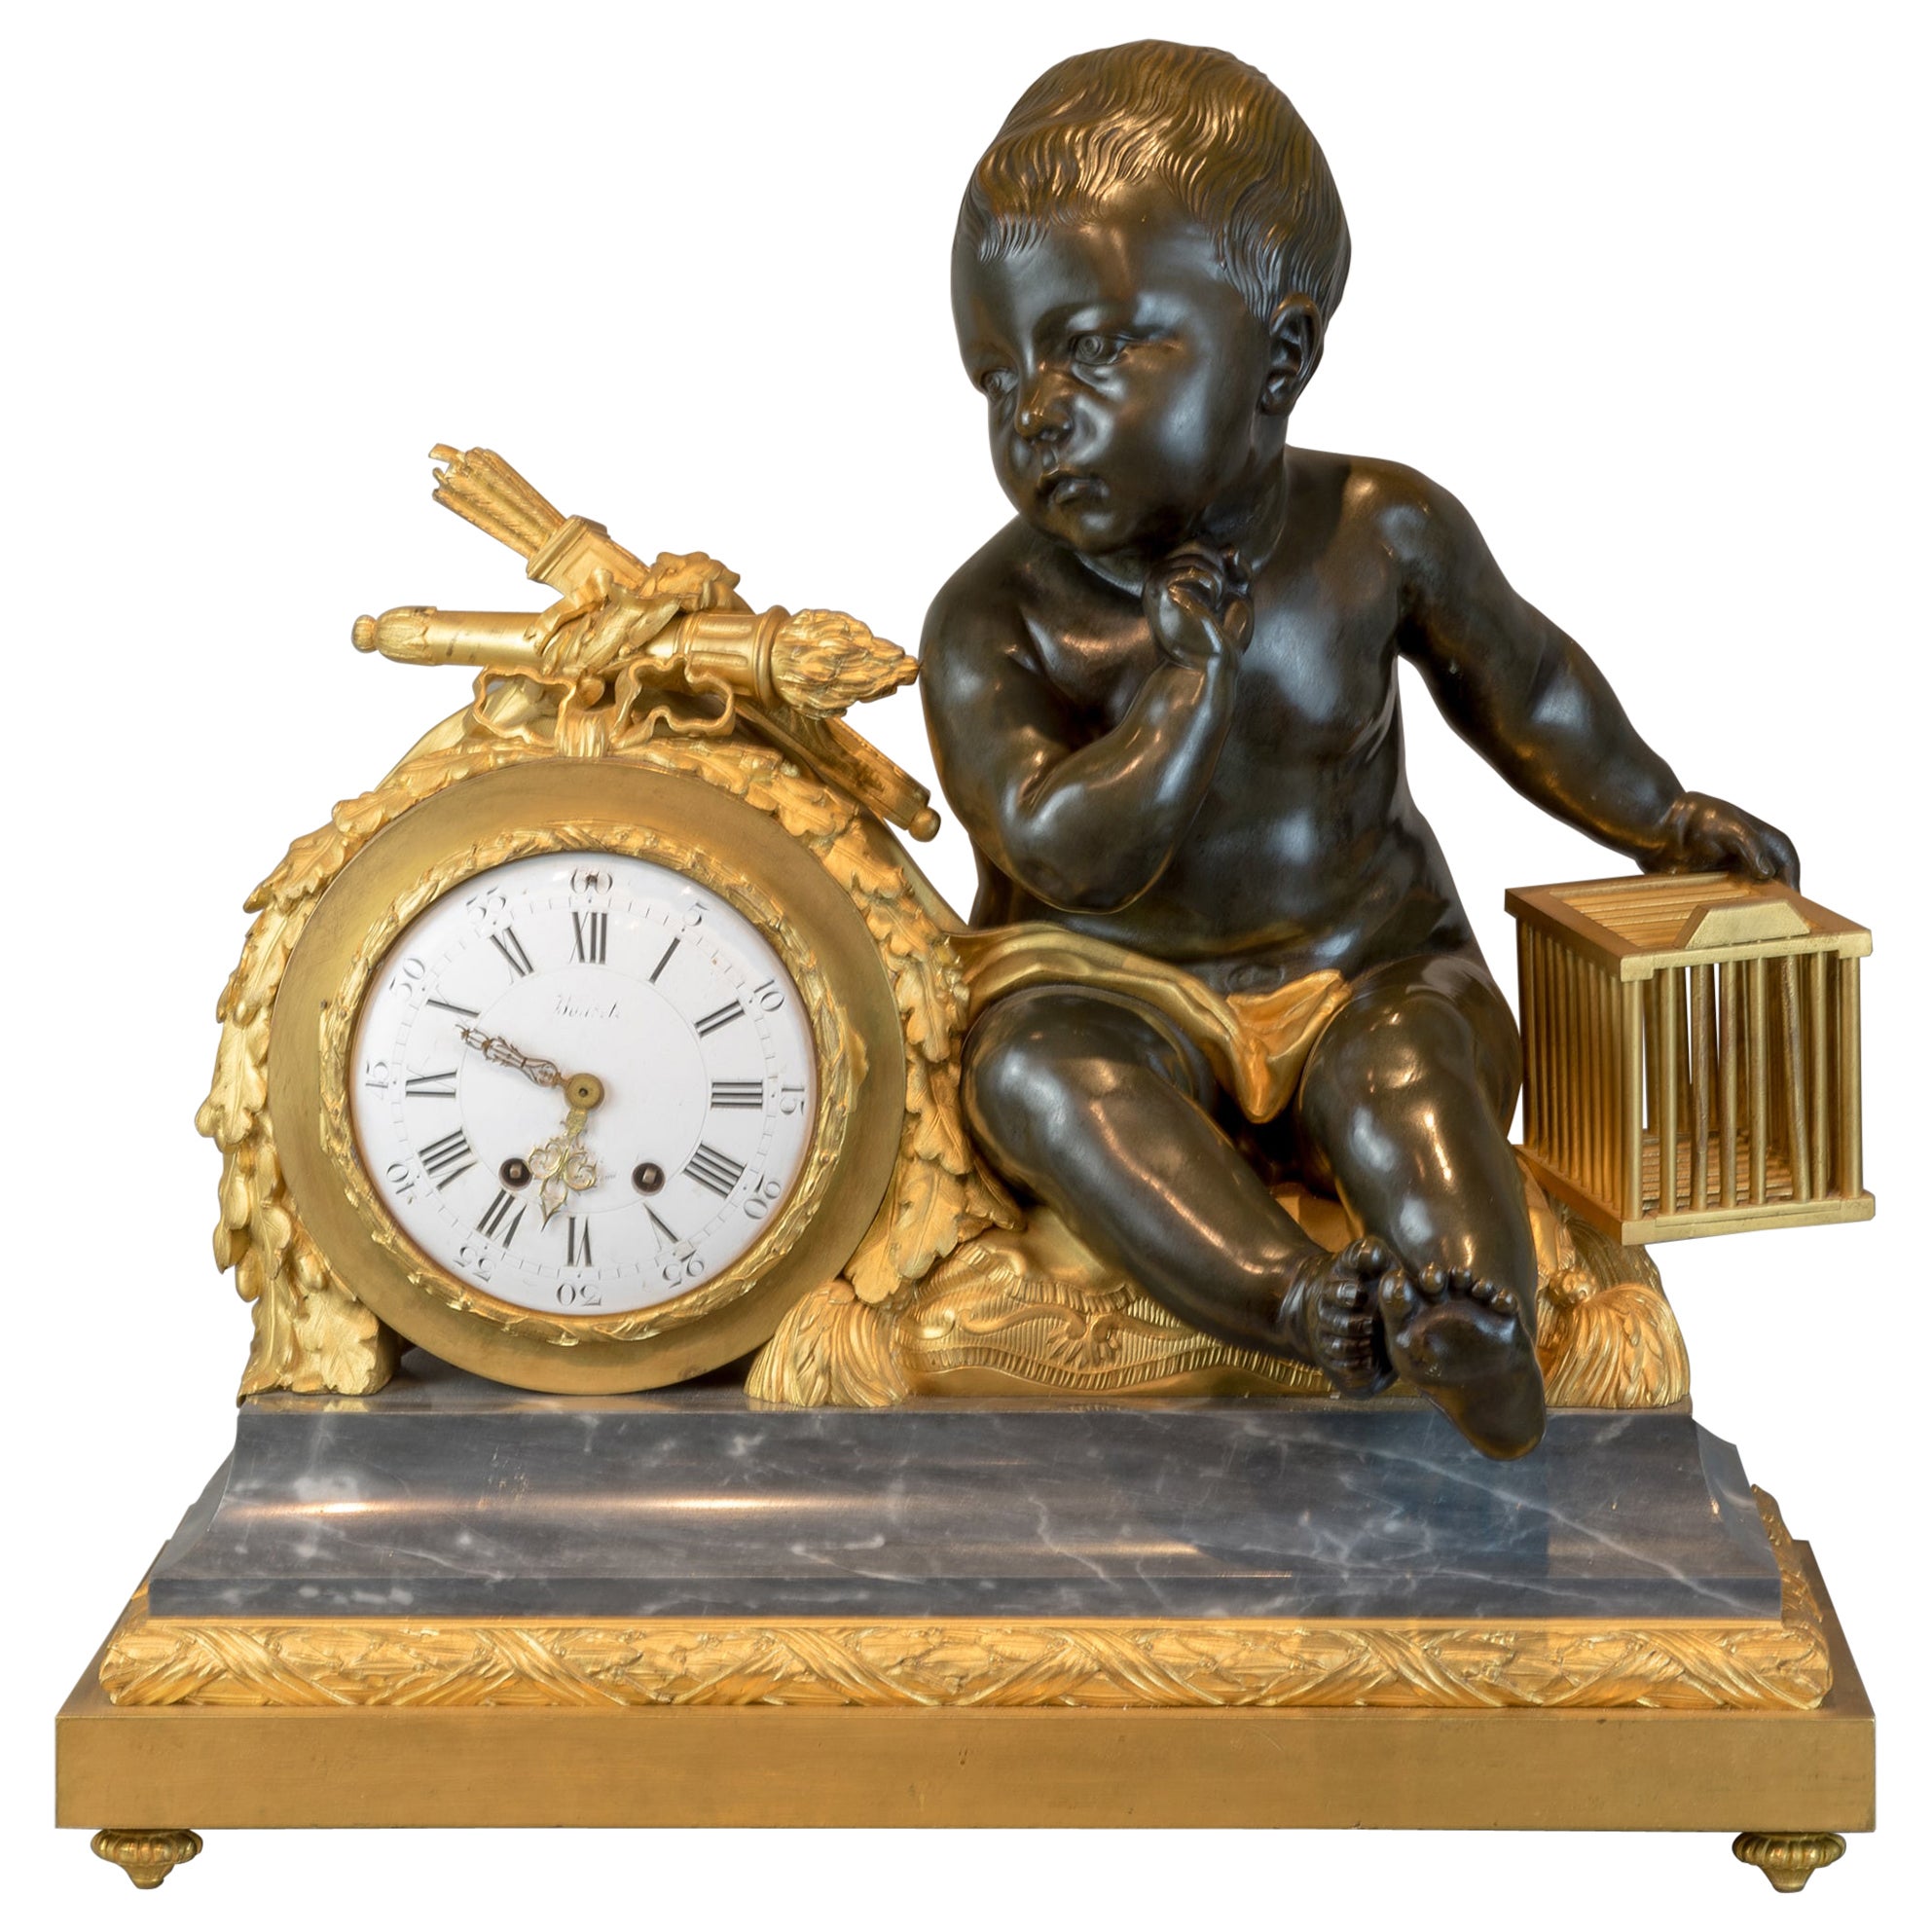  Horloge figurative en bronze doré et marbre de Beurdeley